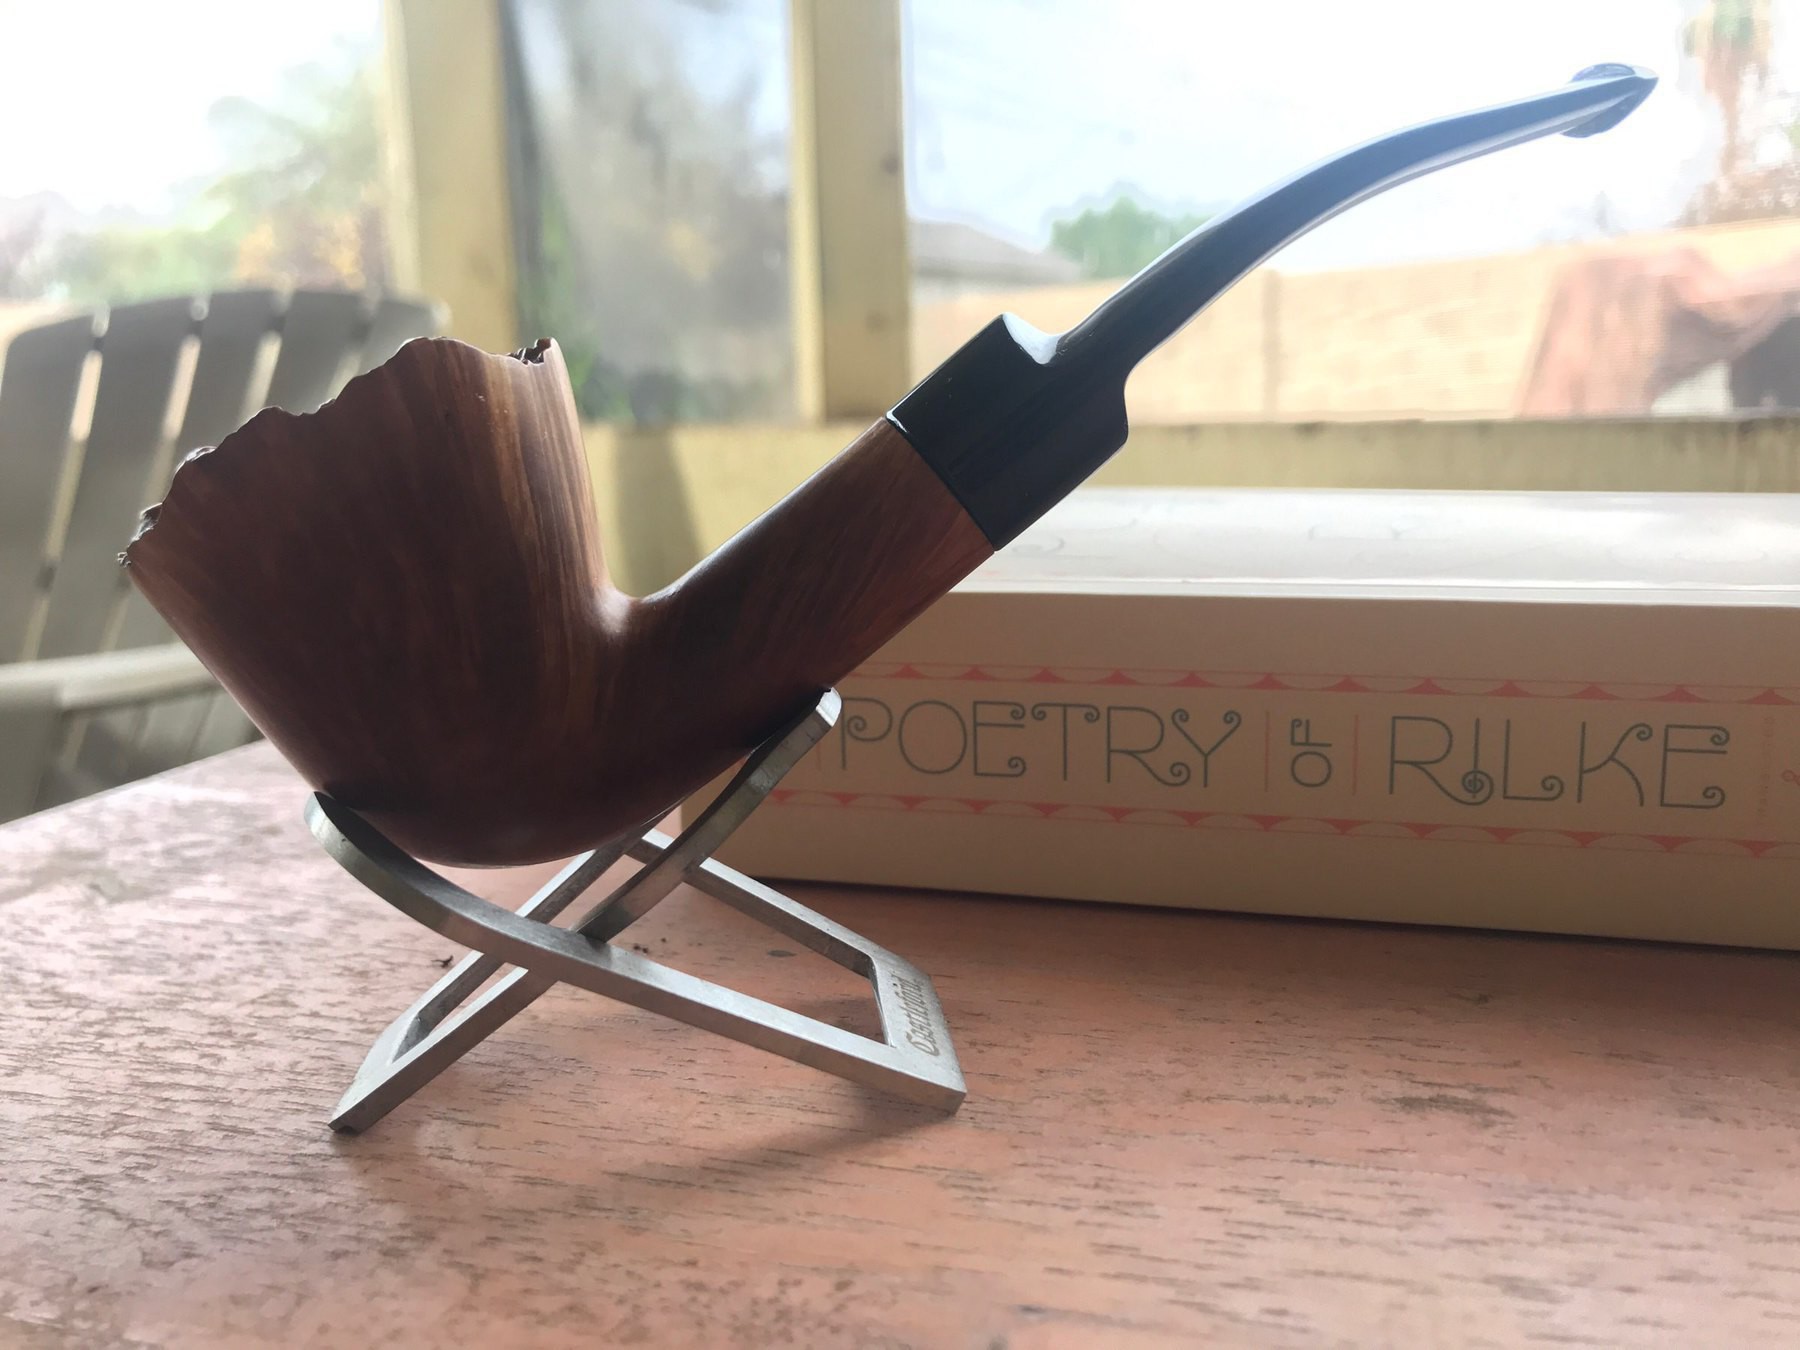 NRH - The ULTIMATE beginner's pipe smoking starter kit [everything